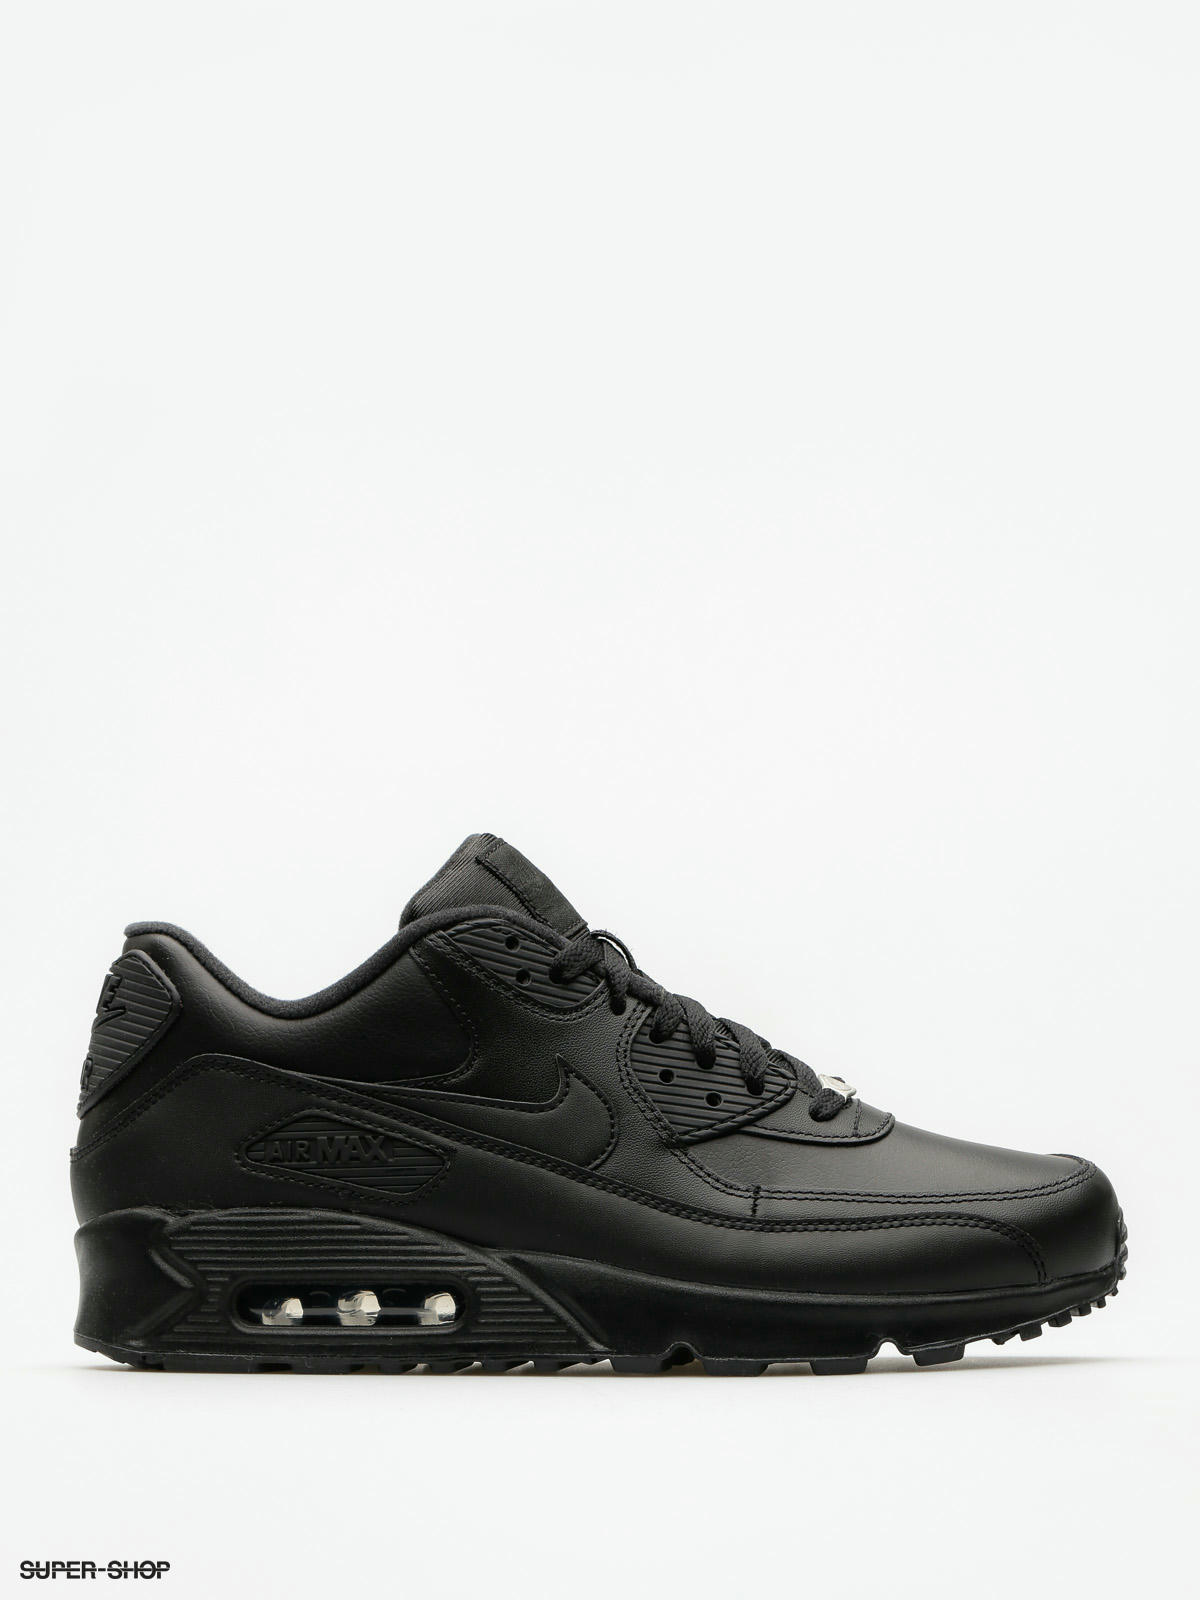 Nike Air Max 90 Shoes (Leather black/black)